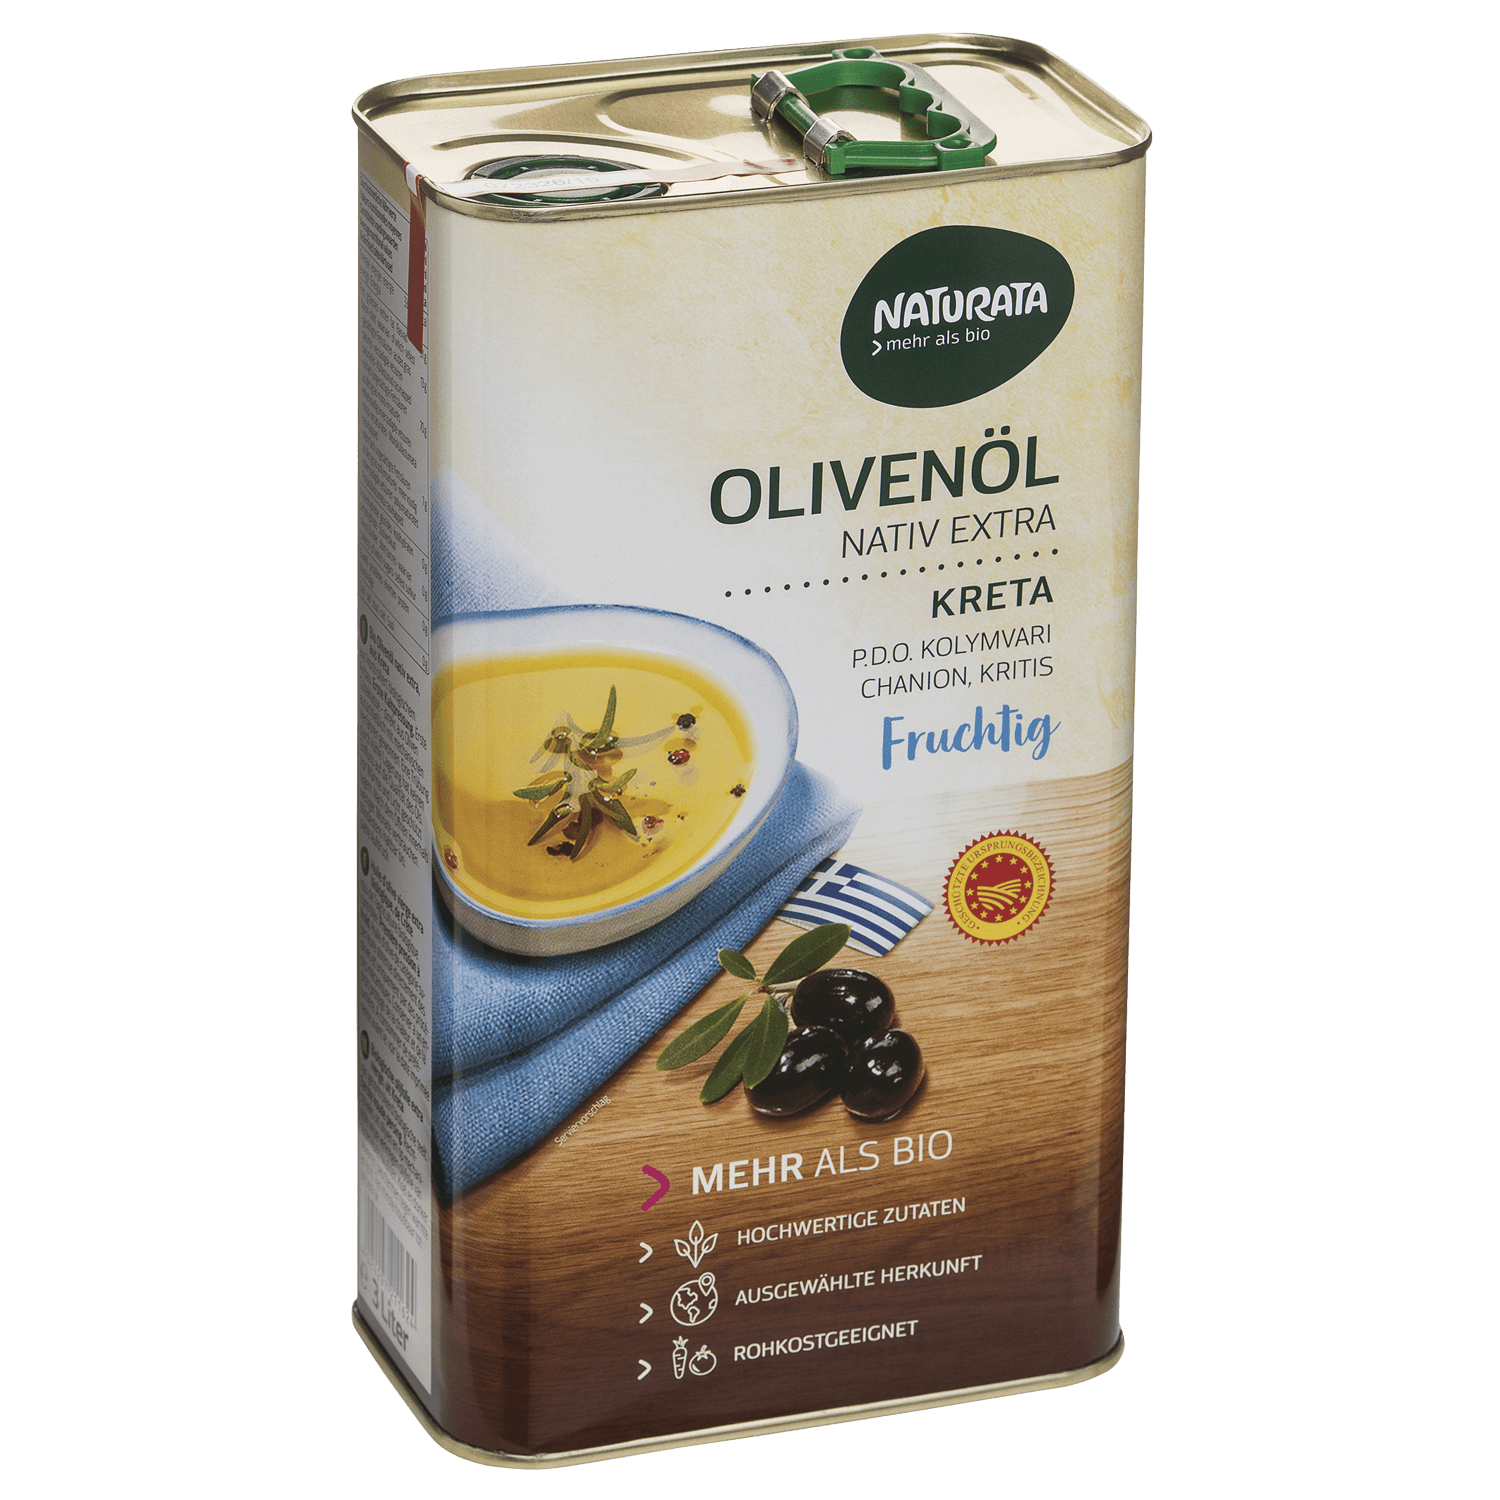 Olivenöl Kreta PDO nativ extra, Bulk, 3 l